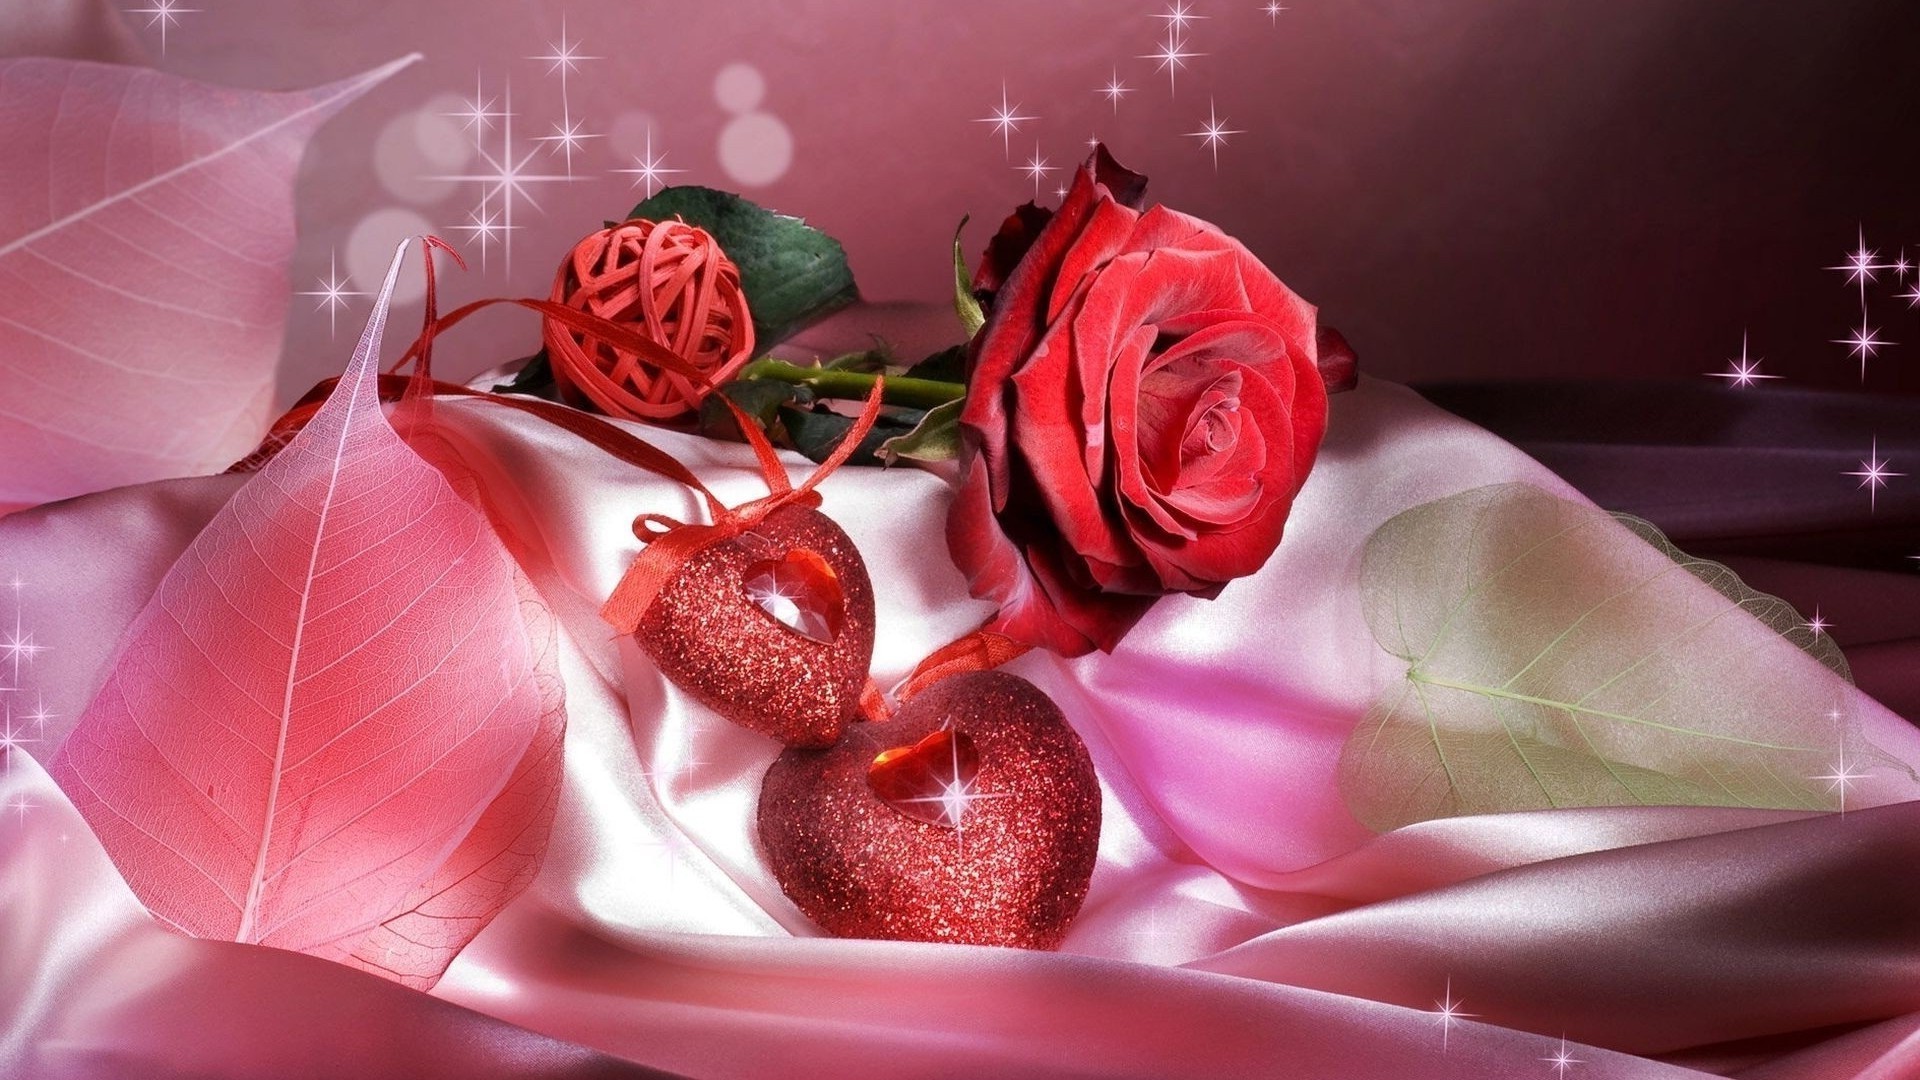 love and romance flower rose love wedding romantic romance decoration beautiful gift celebration color desktop